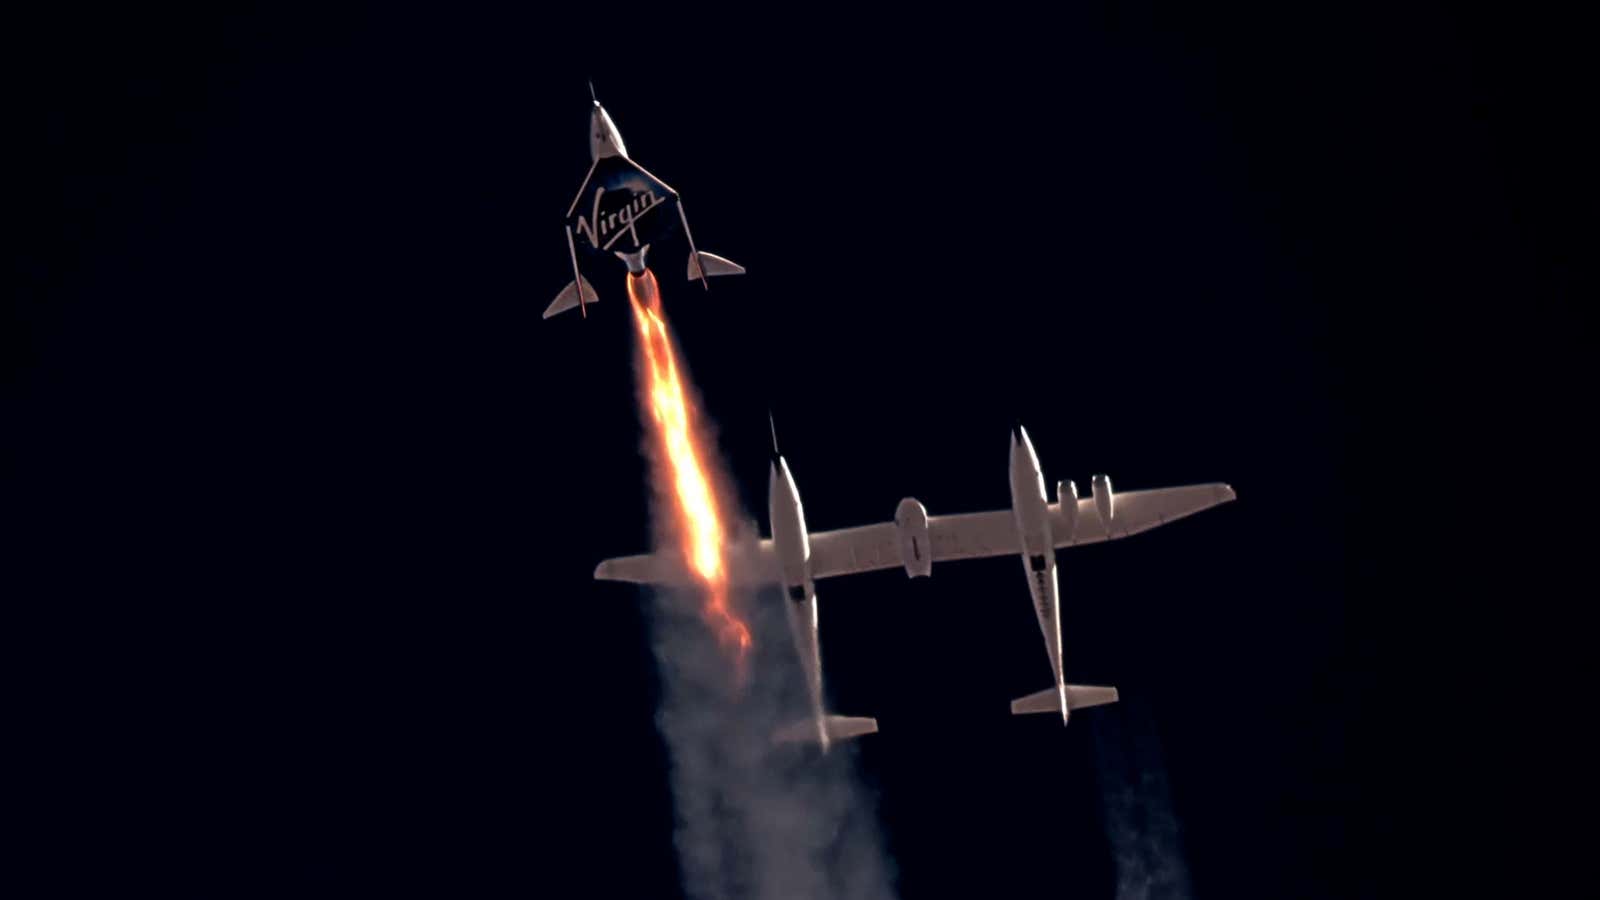 Virgin Galactic’s rocket plane takes flight with founder Richard Branson onboard.